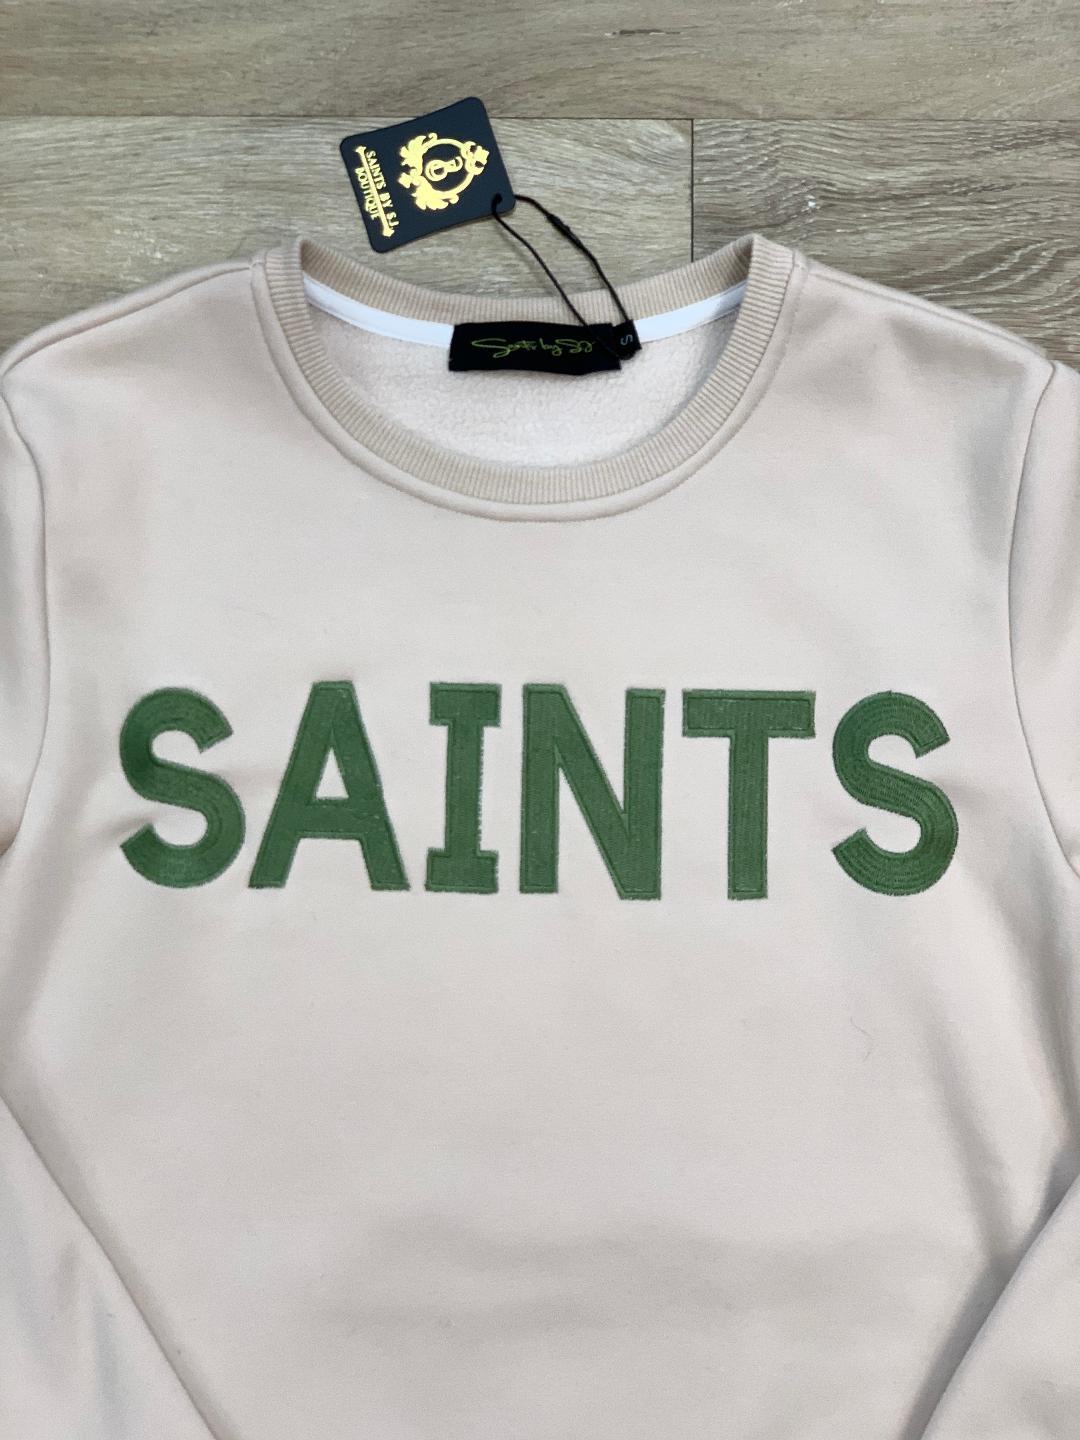 Saints by SJ | Shop